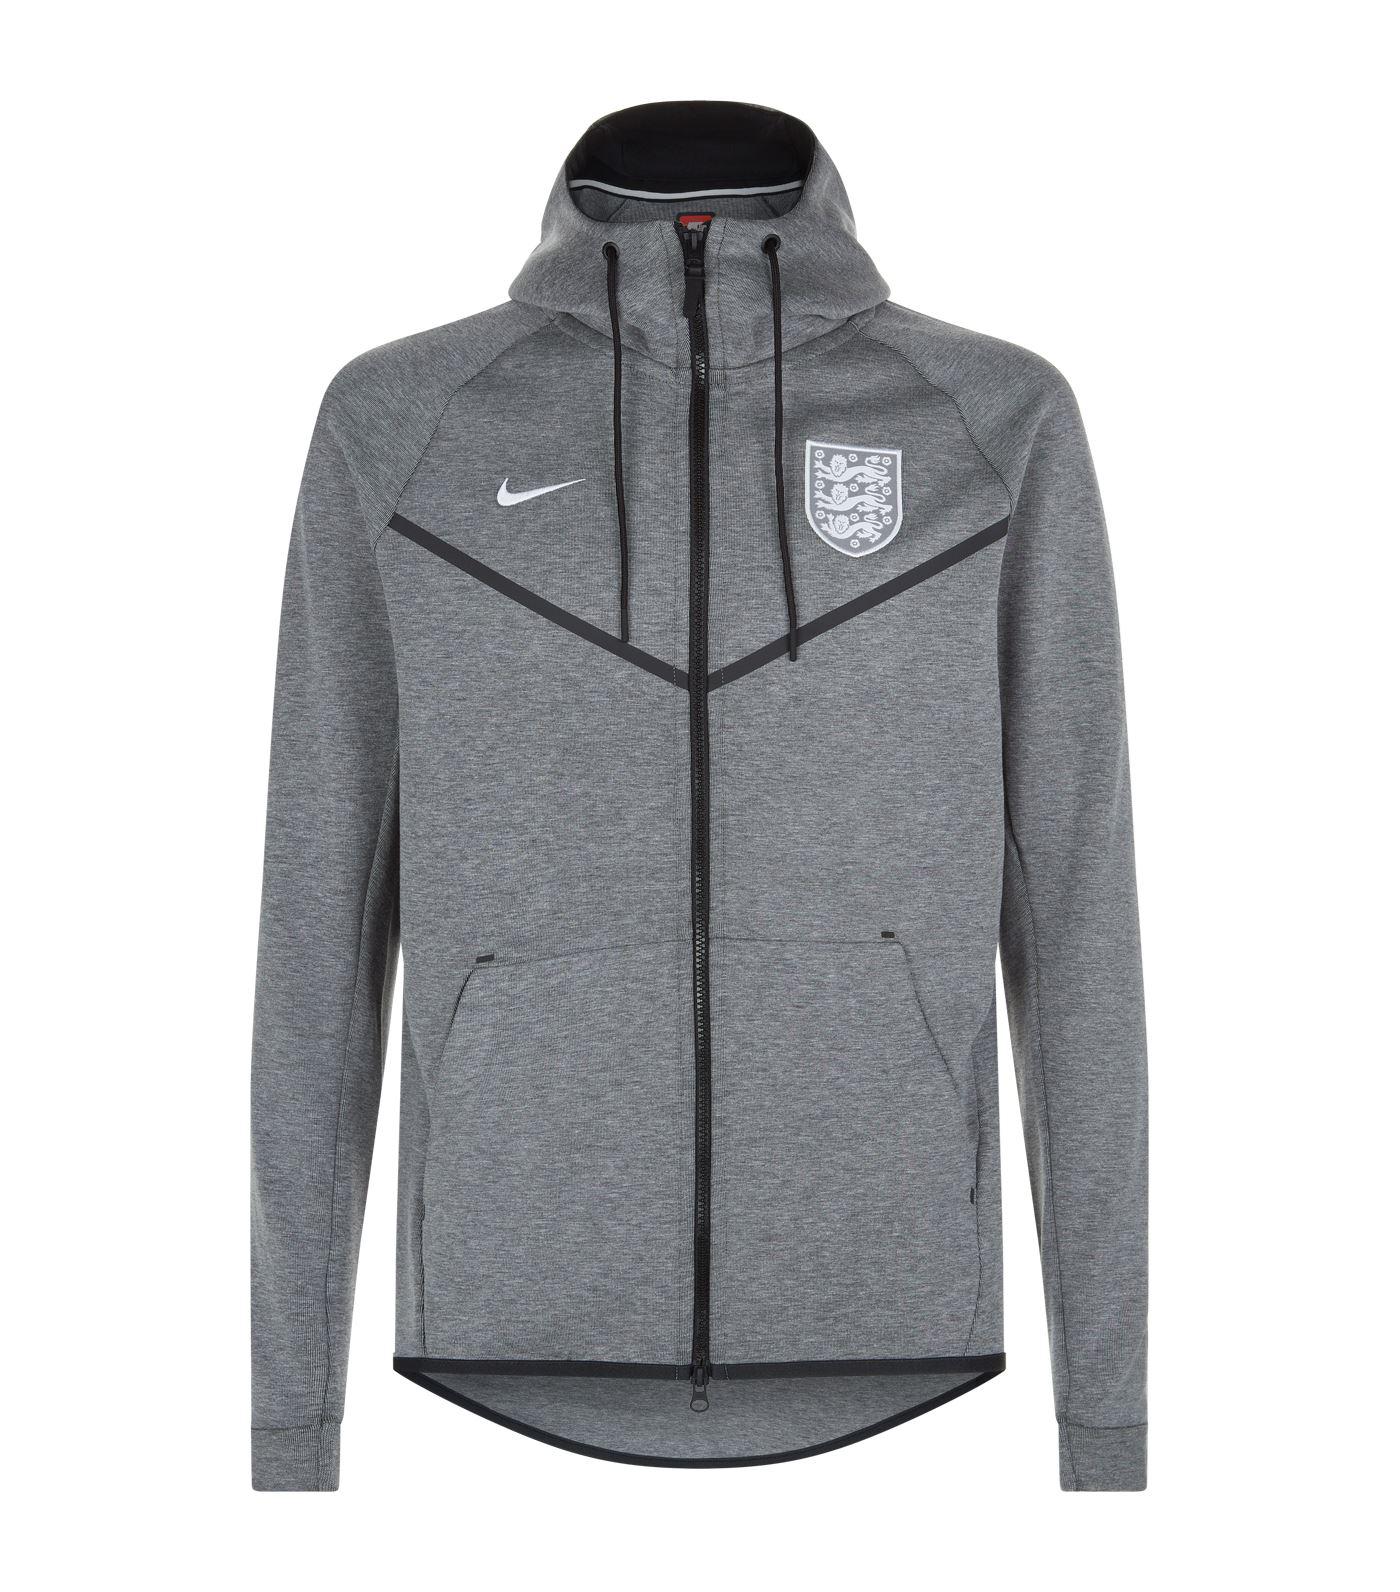 Nike England Tech Fleece Windrunner Jacket in Grey (Gray) for Men - Lyst